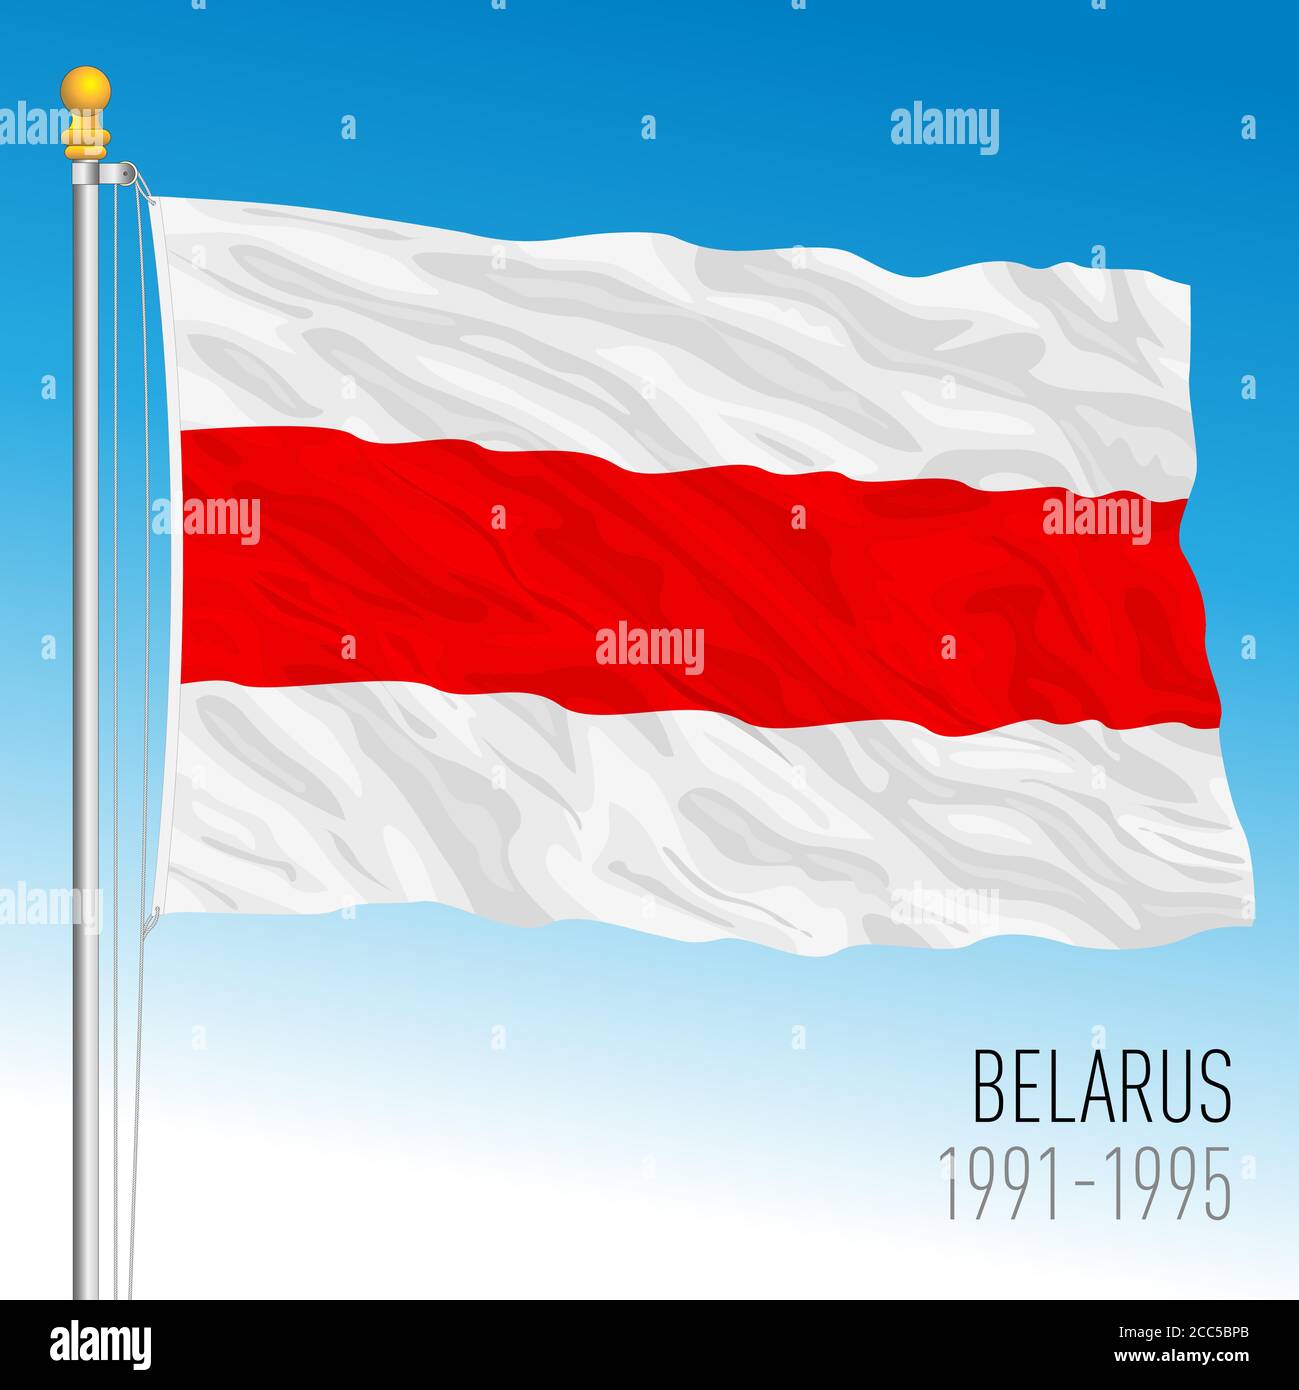 Belarus historical flag, European country, 1991-1995, vector illustration Stock Vector